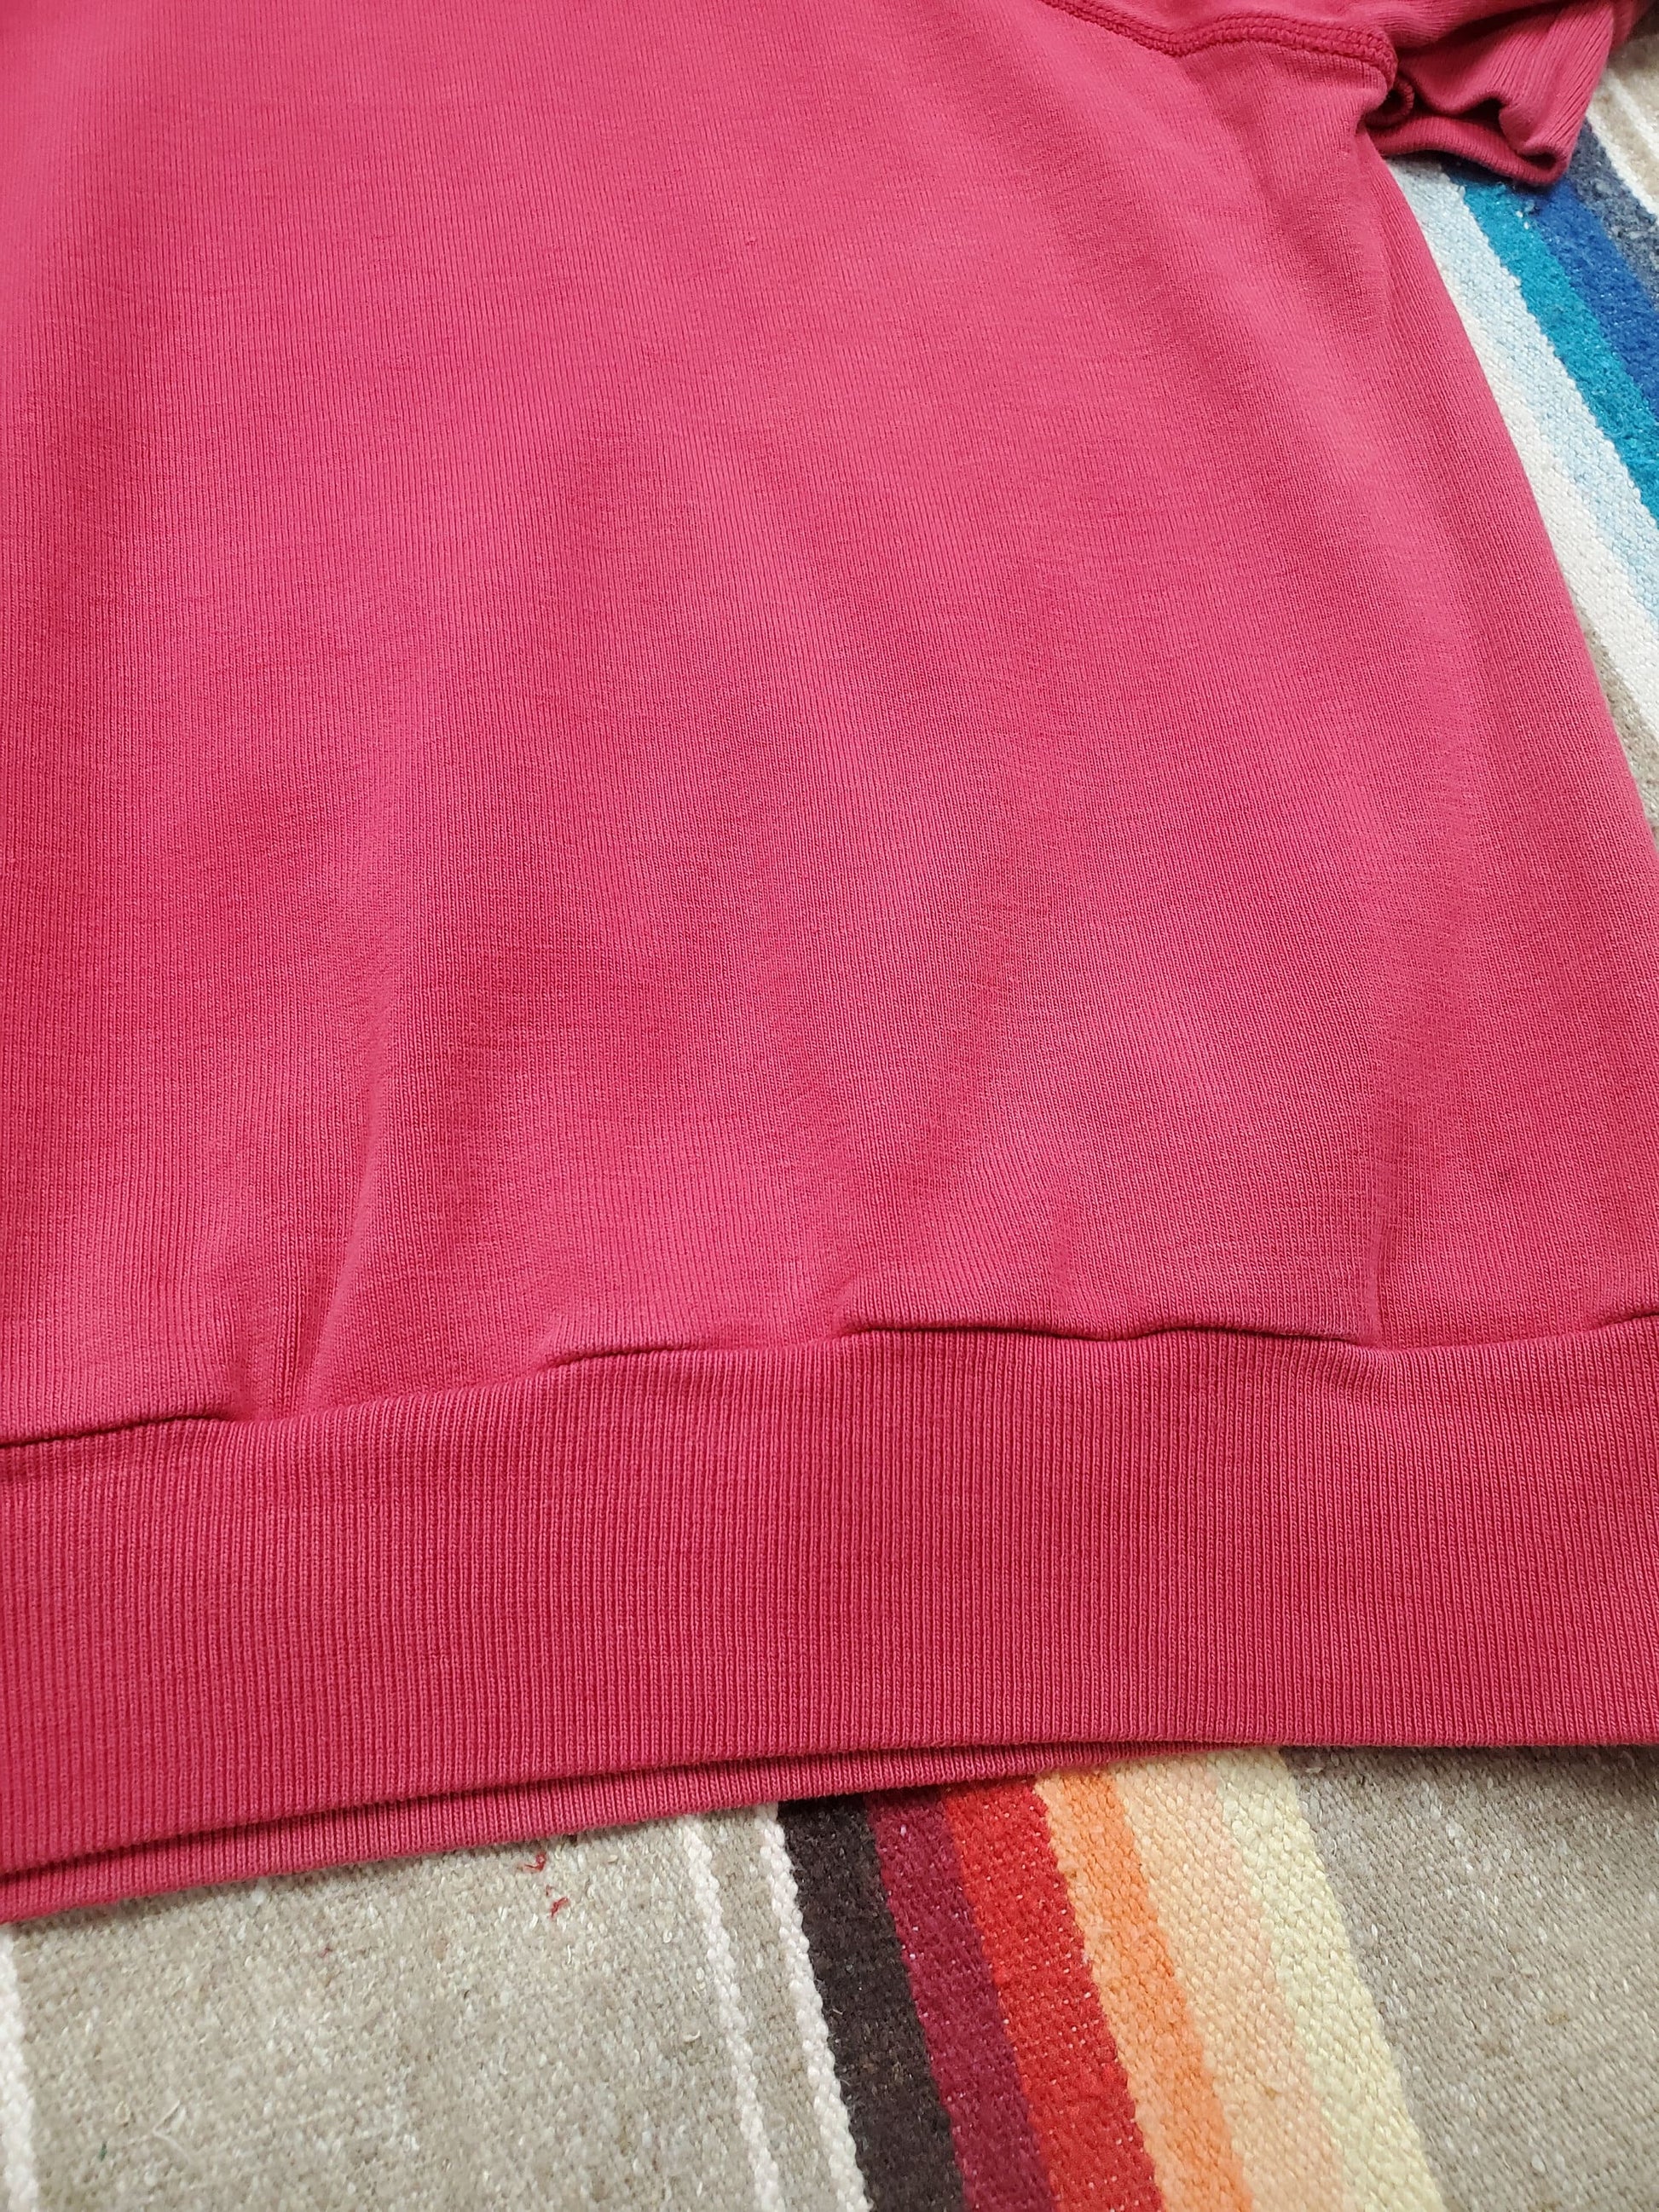 1980s/1990s The Villager Red Blank Raglan Sweatshirt Size S/M